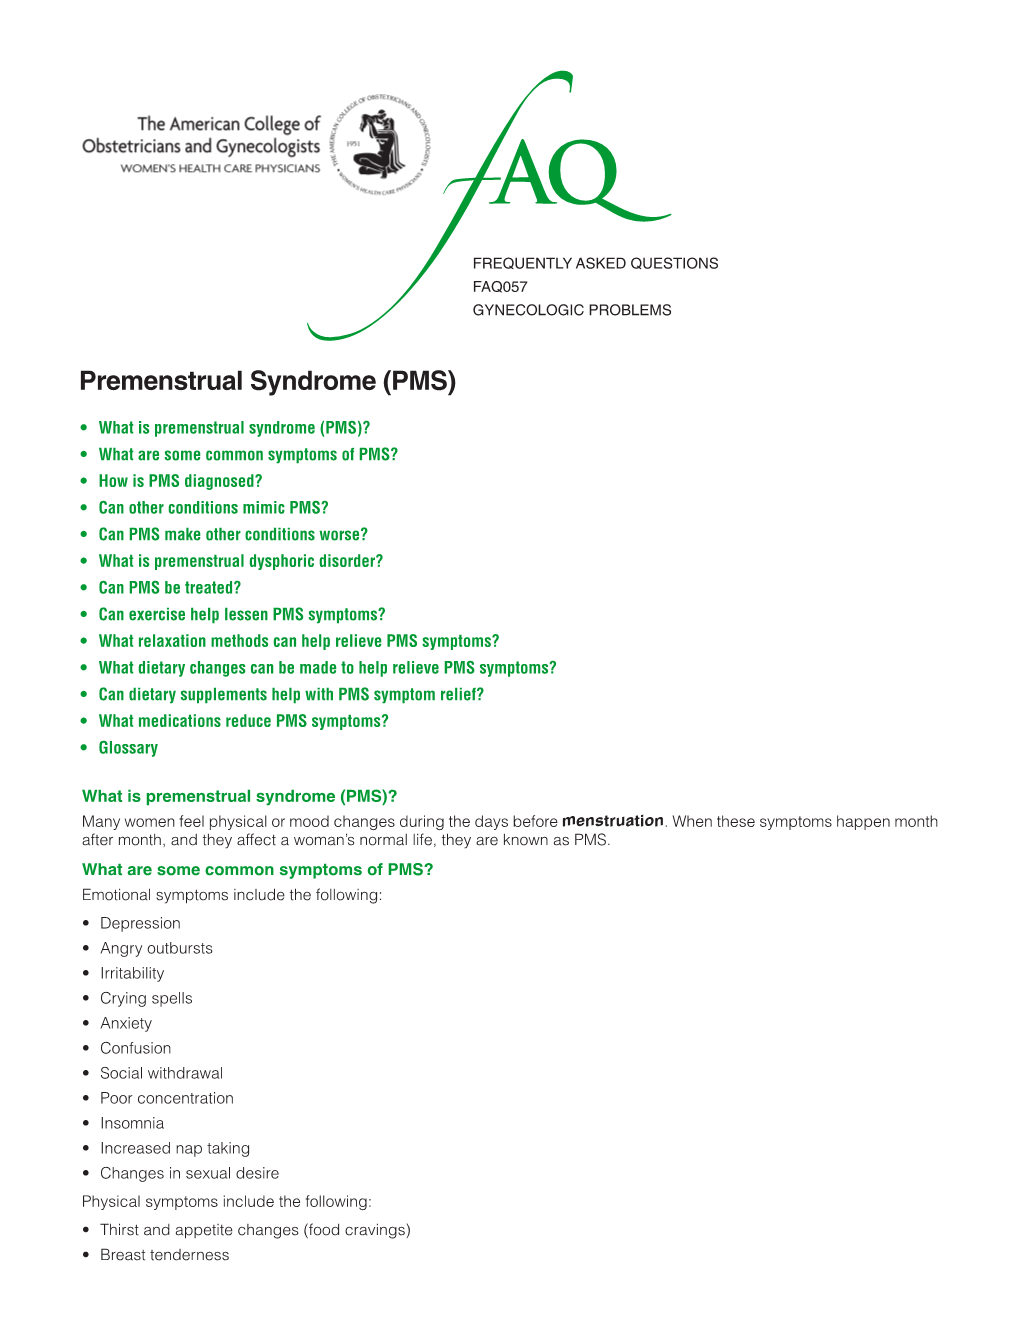 FAQ057 -- Premenstrual Syndrome (PMS)